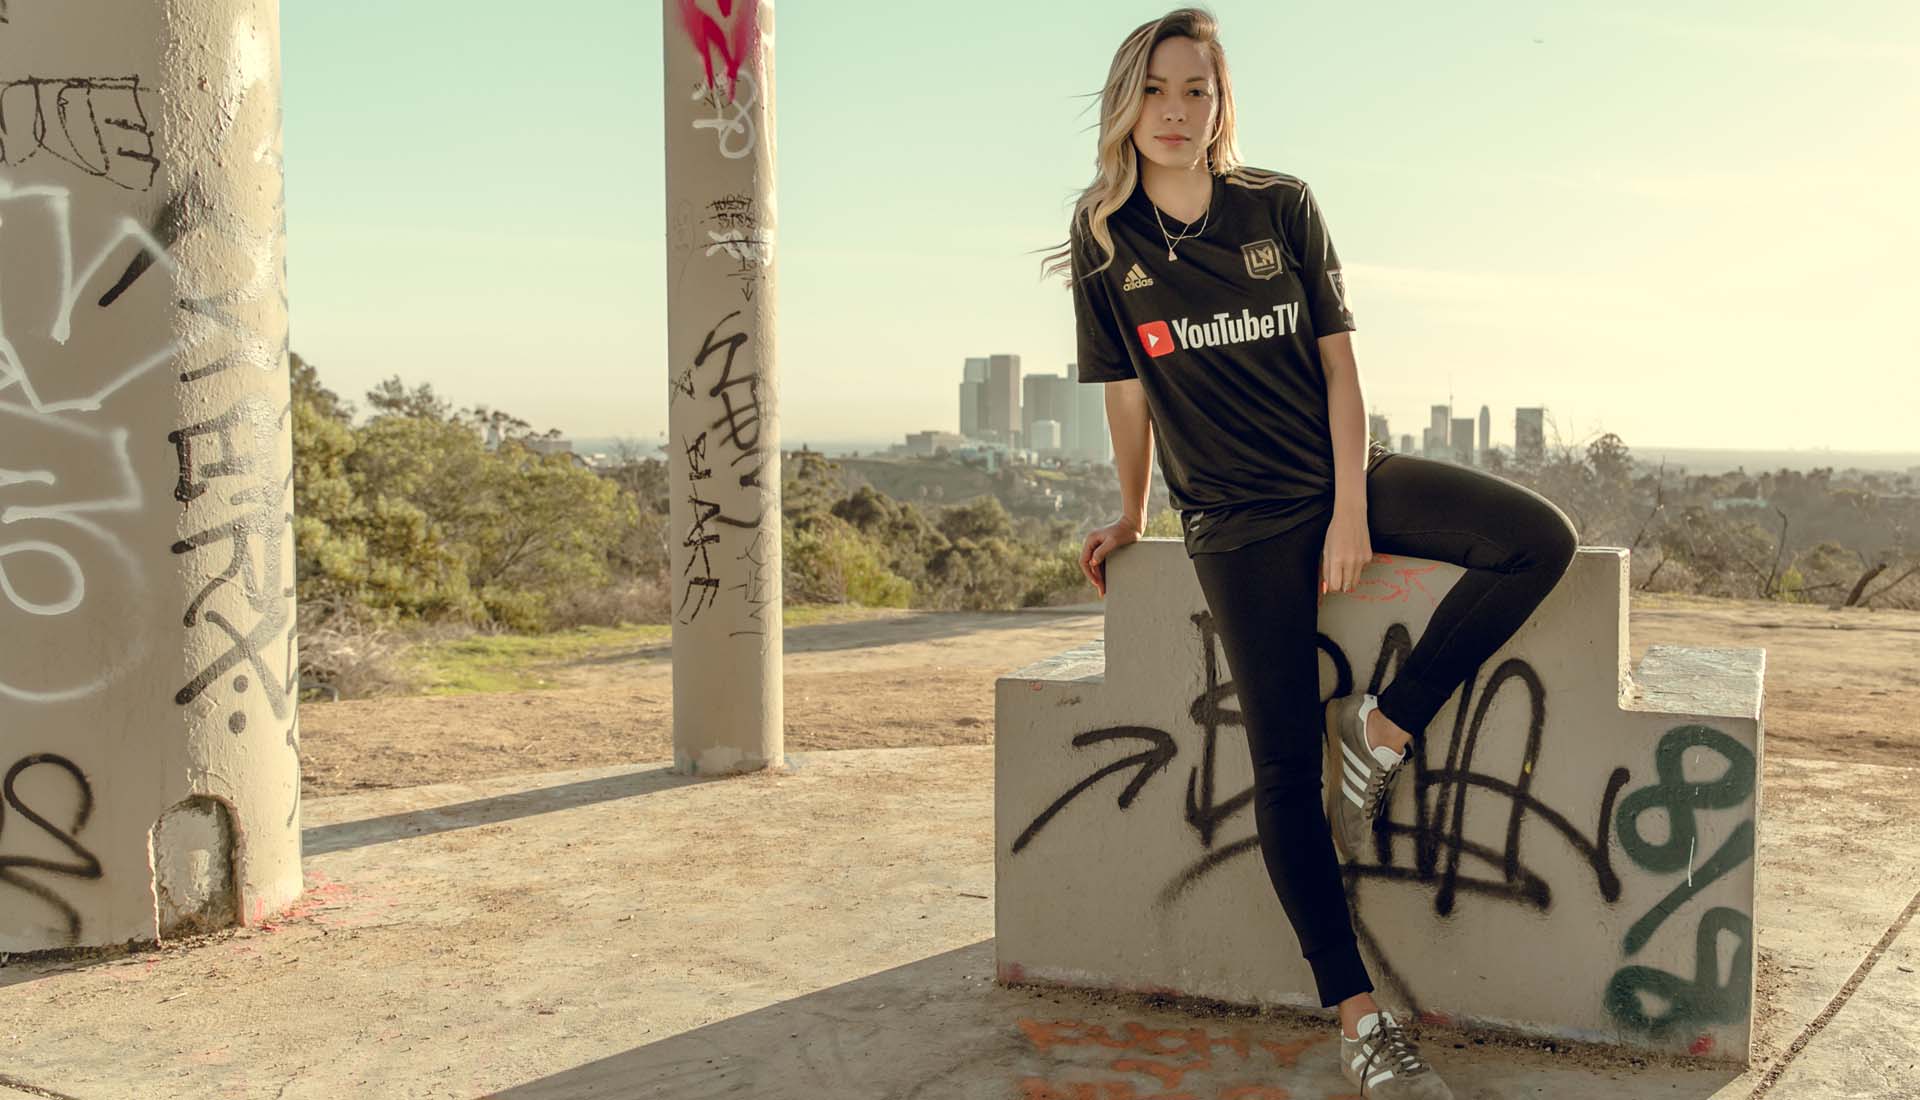 LAFC 2018 adidas Home & Away Shirts - SoccerBible